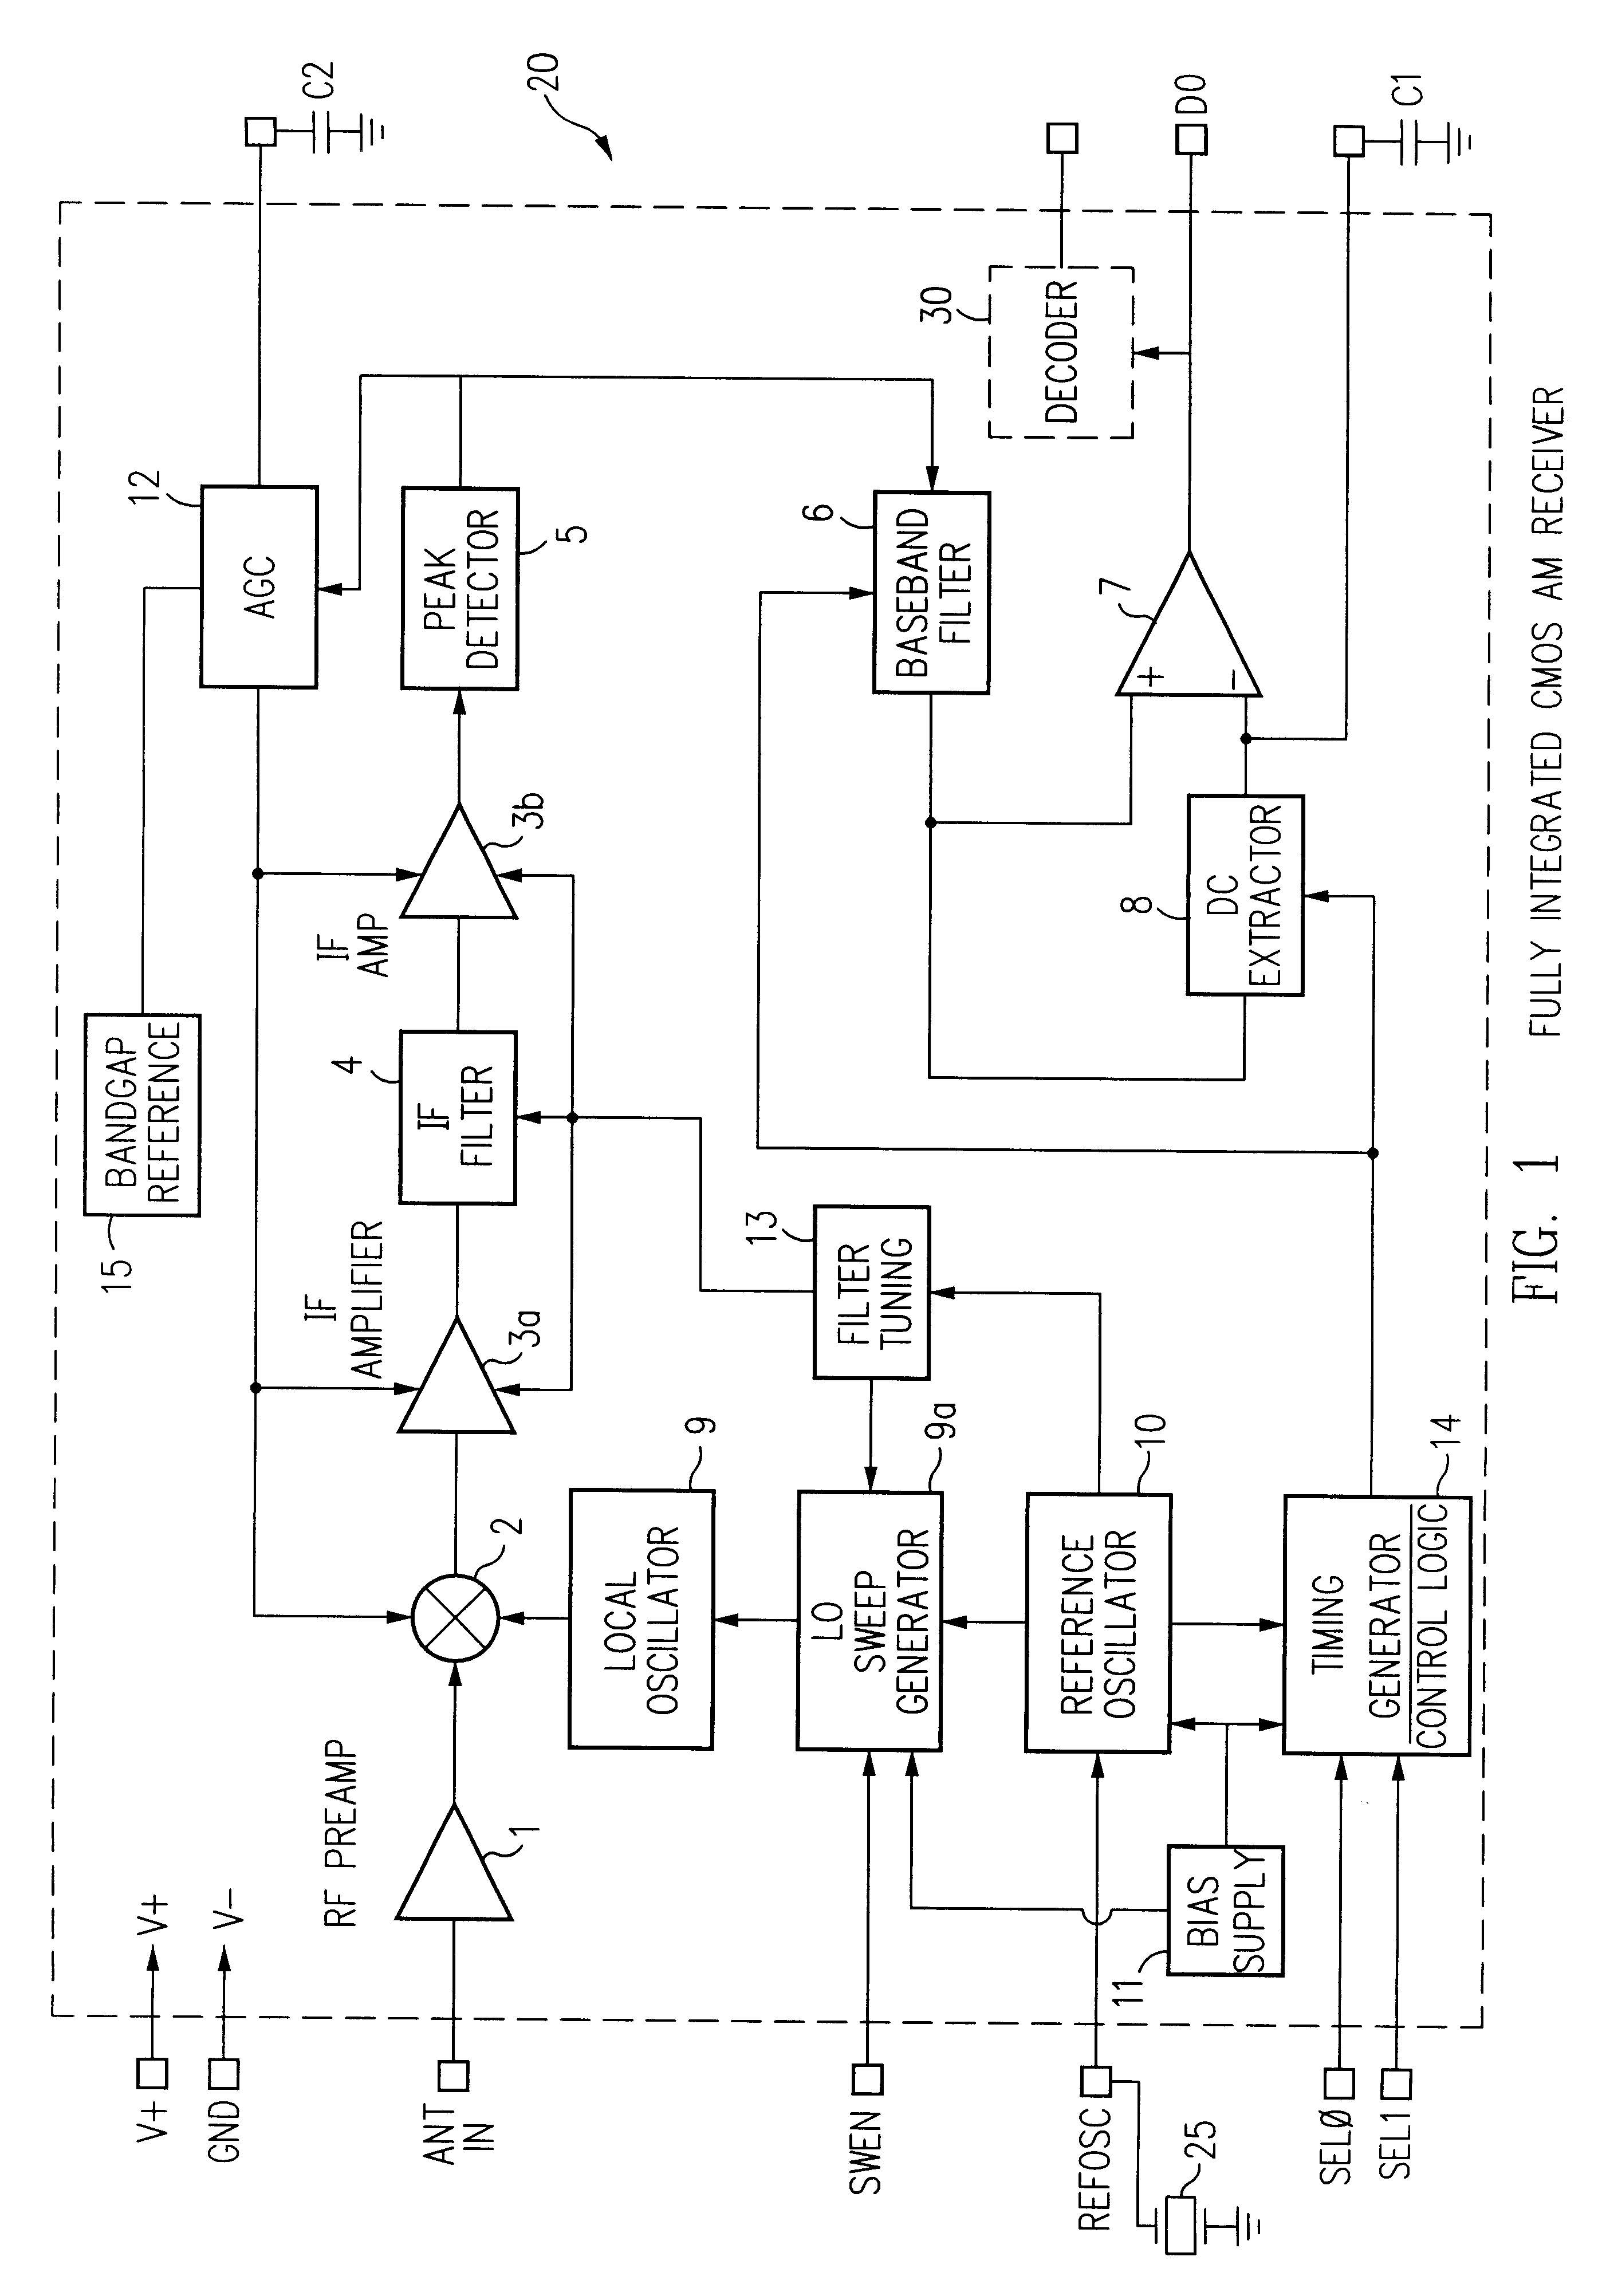 Bias signal generator in radio receiver